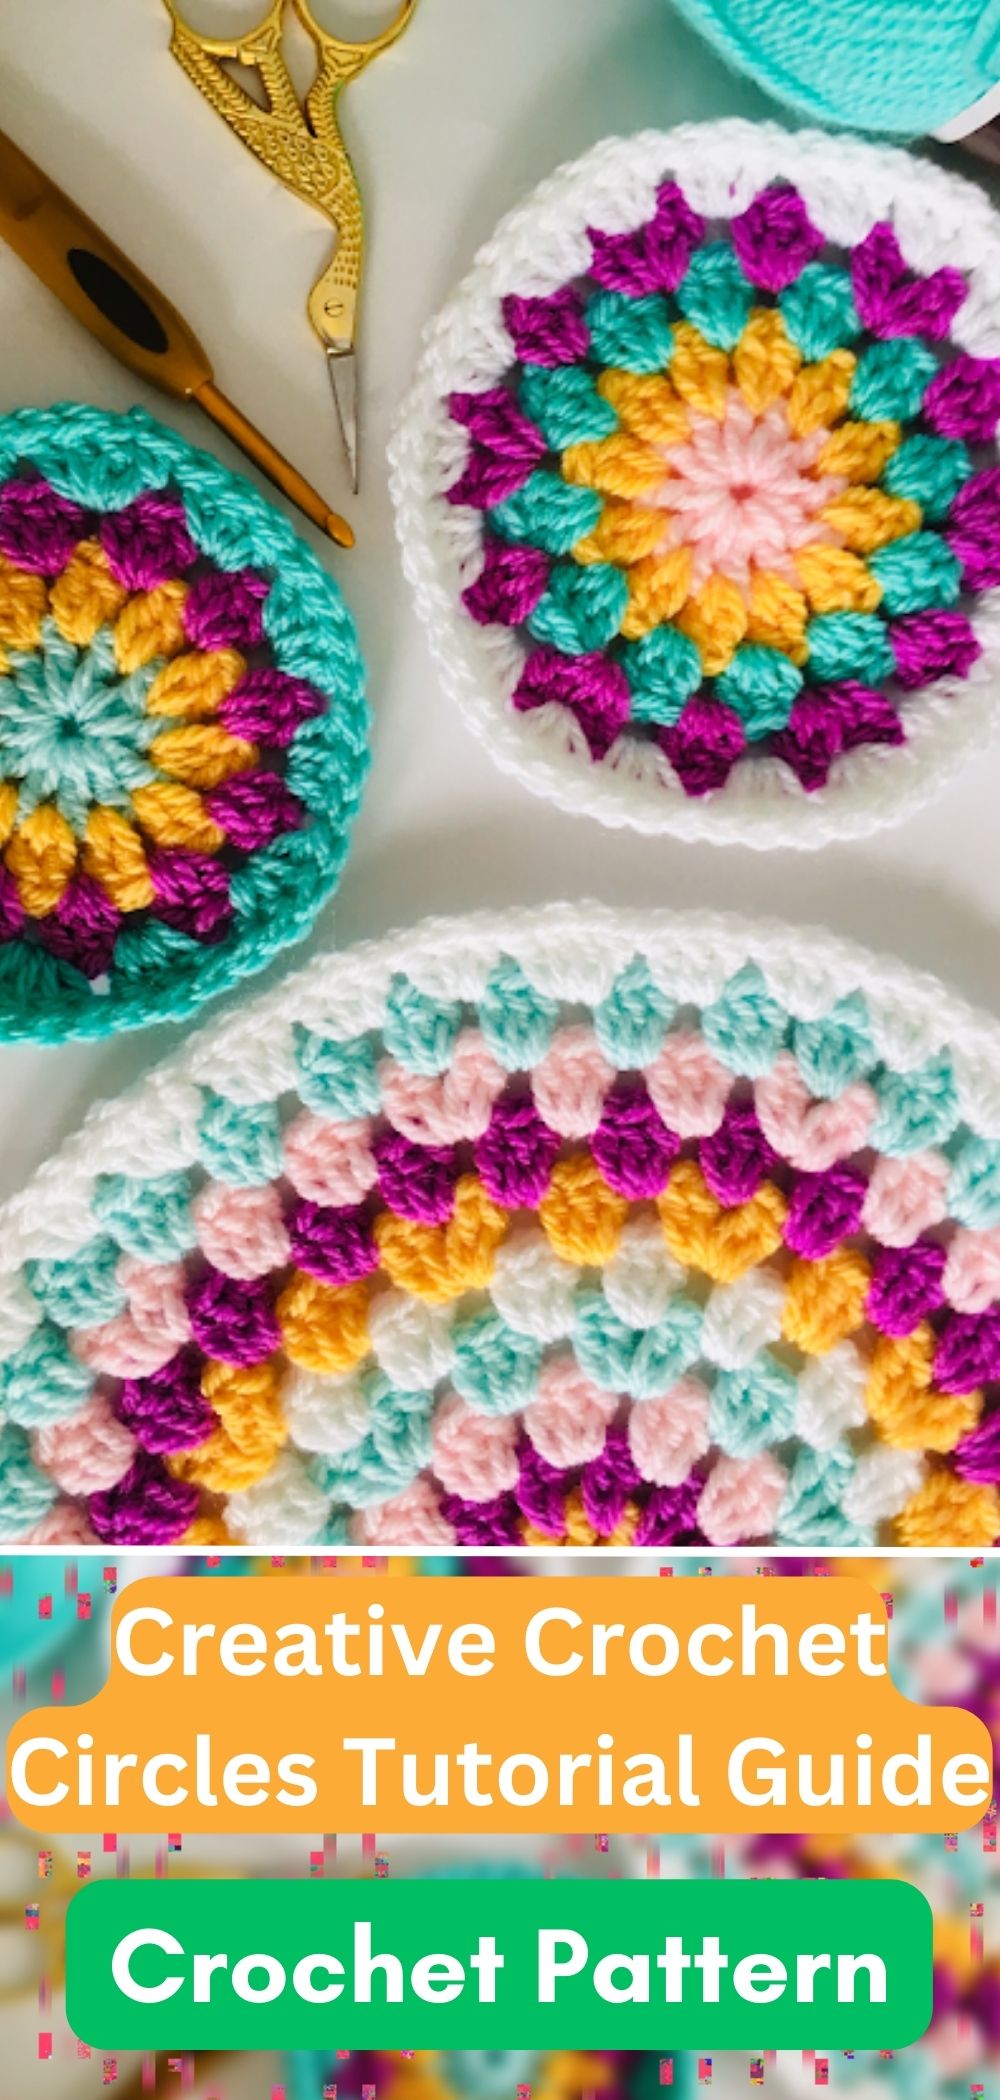 Creative Crochet Circles Tutorial